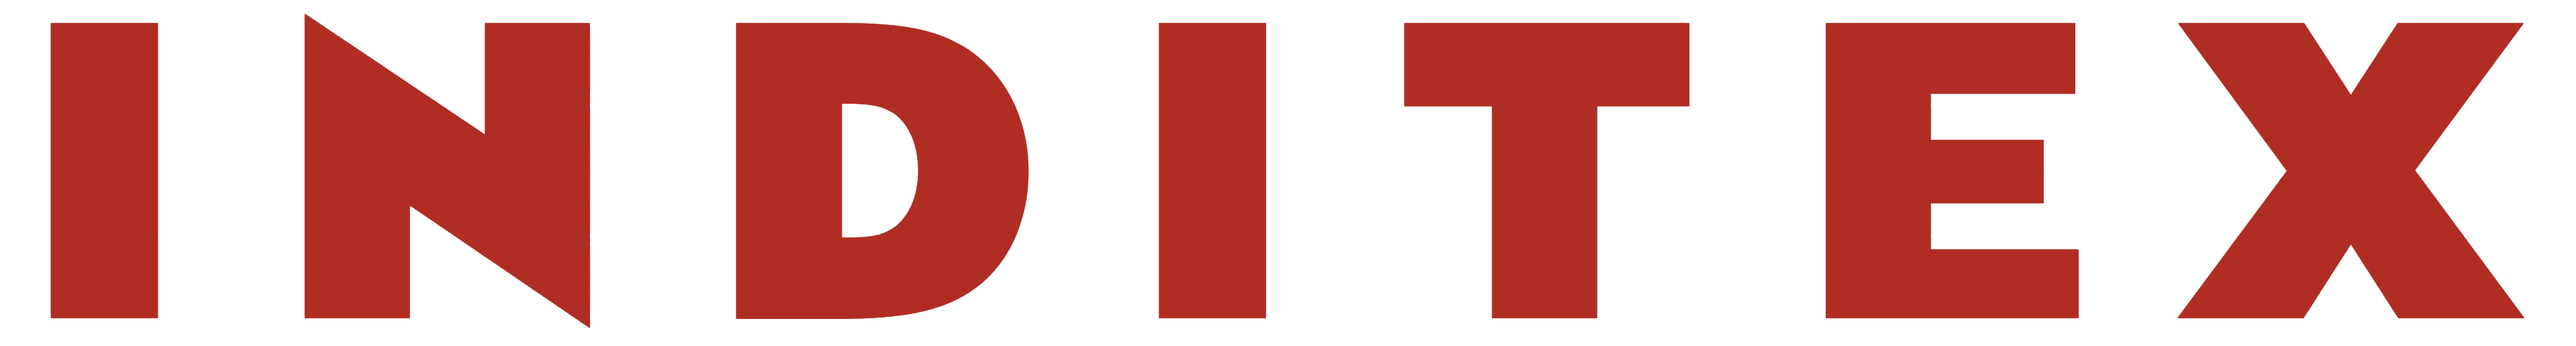 Inditex logo, Inditex Logo PNG - Free PNG